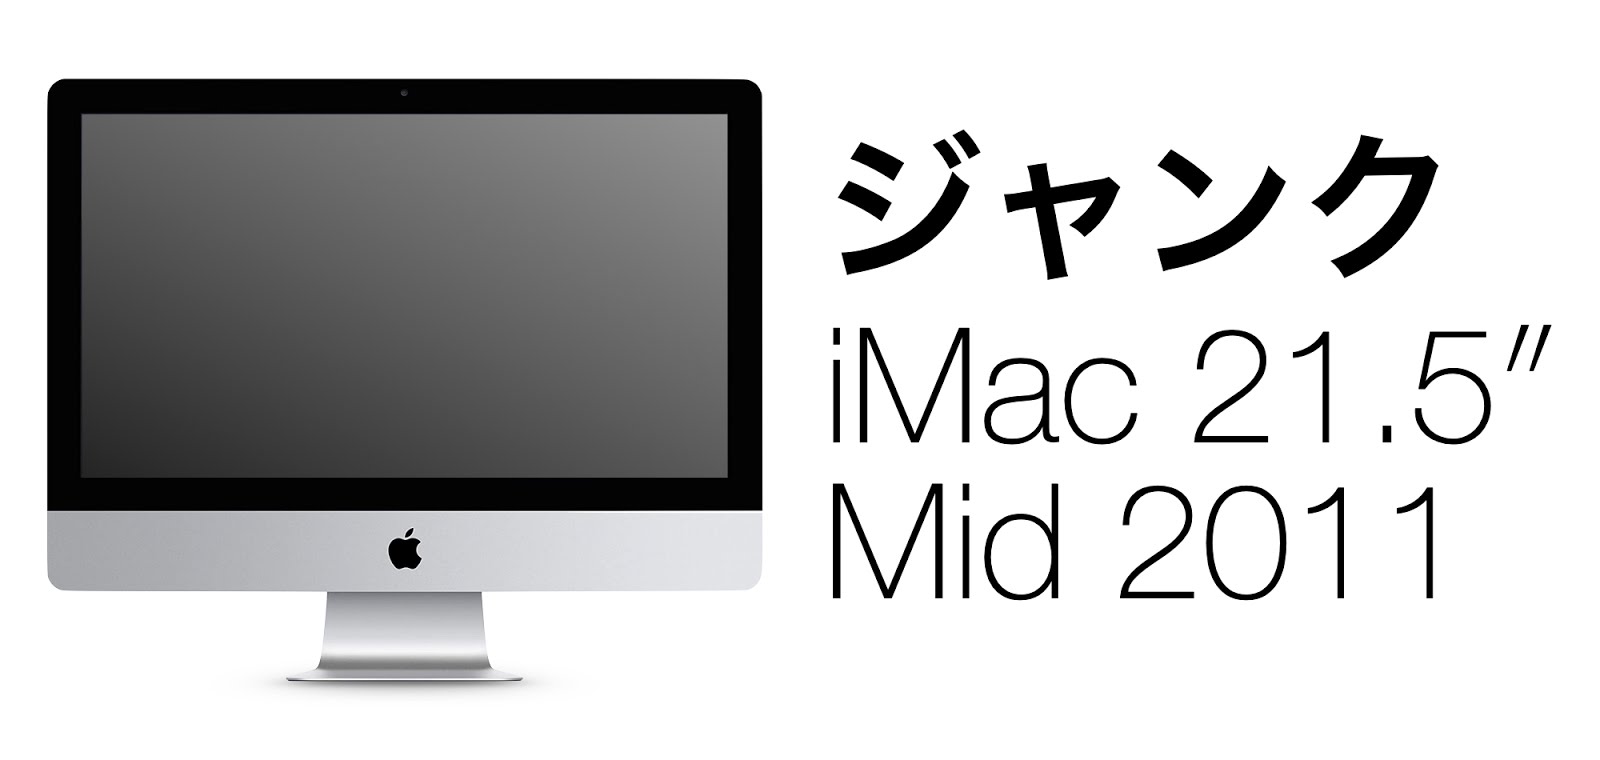 iMac mid 2011 21.5